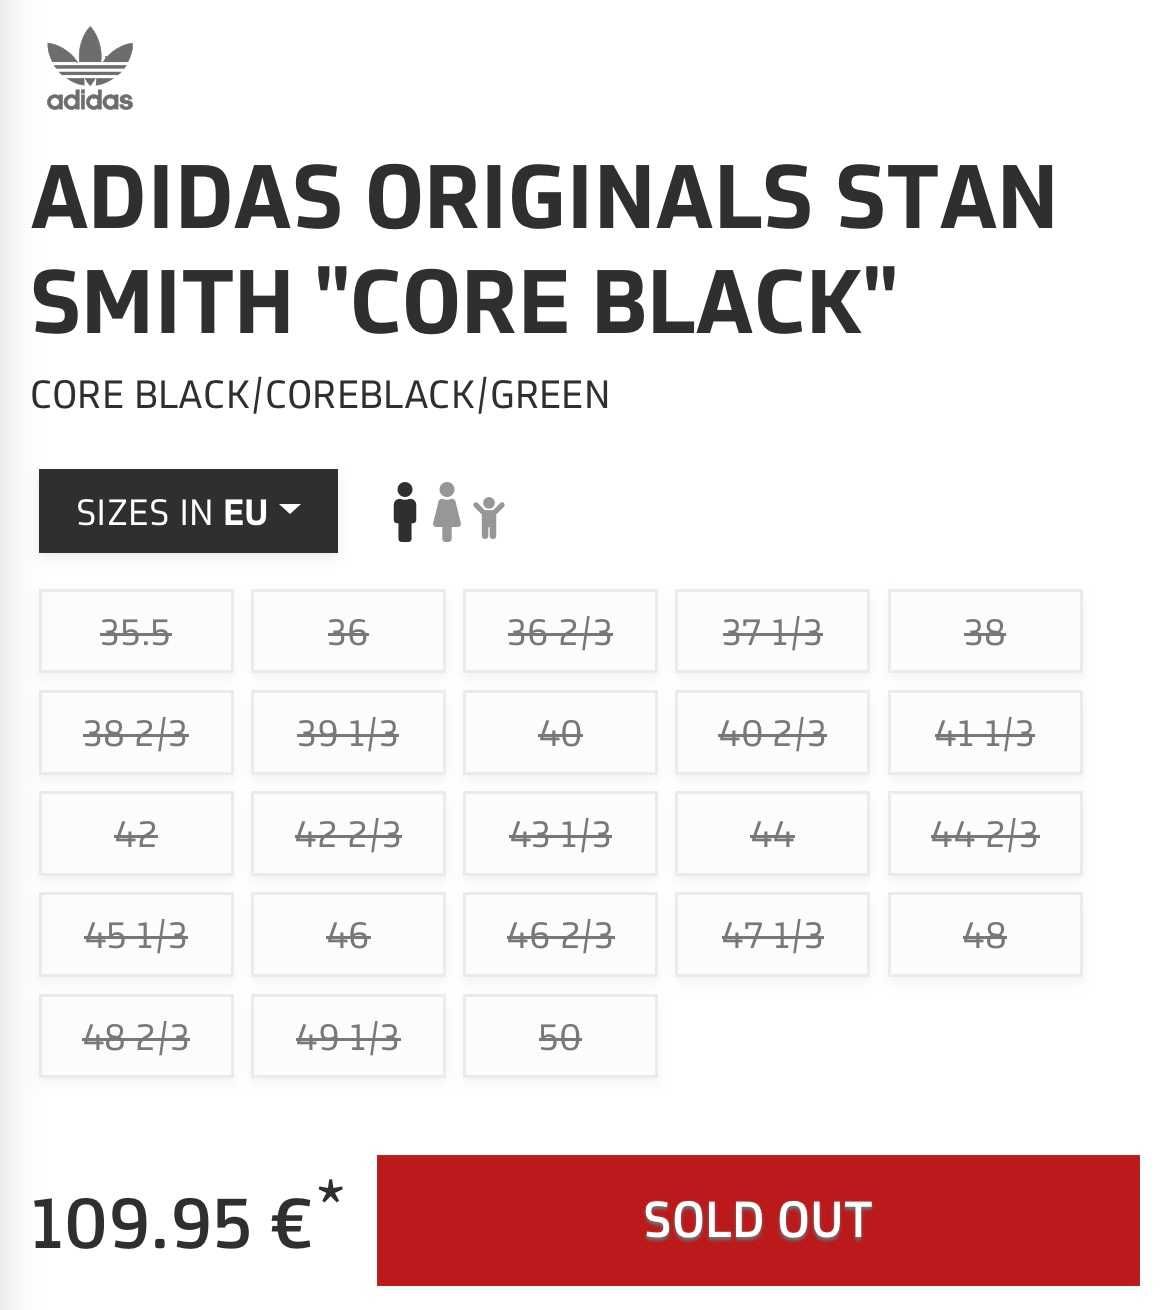 Adidas originals stan smith “core black”